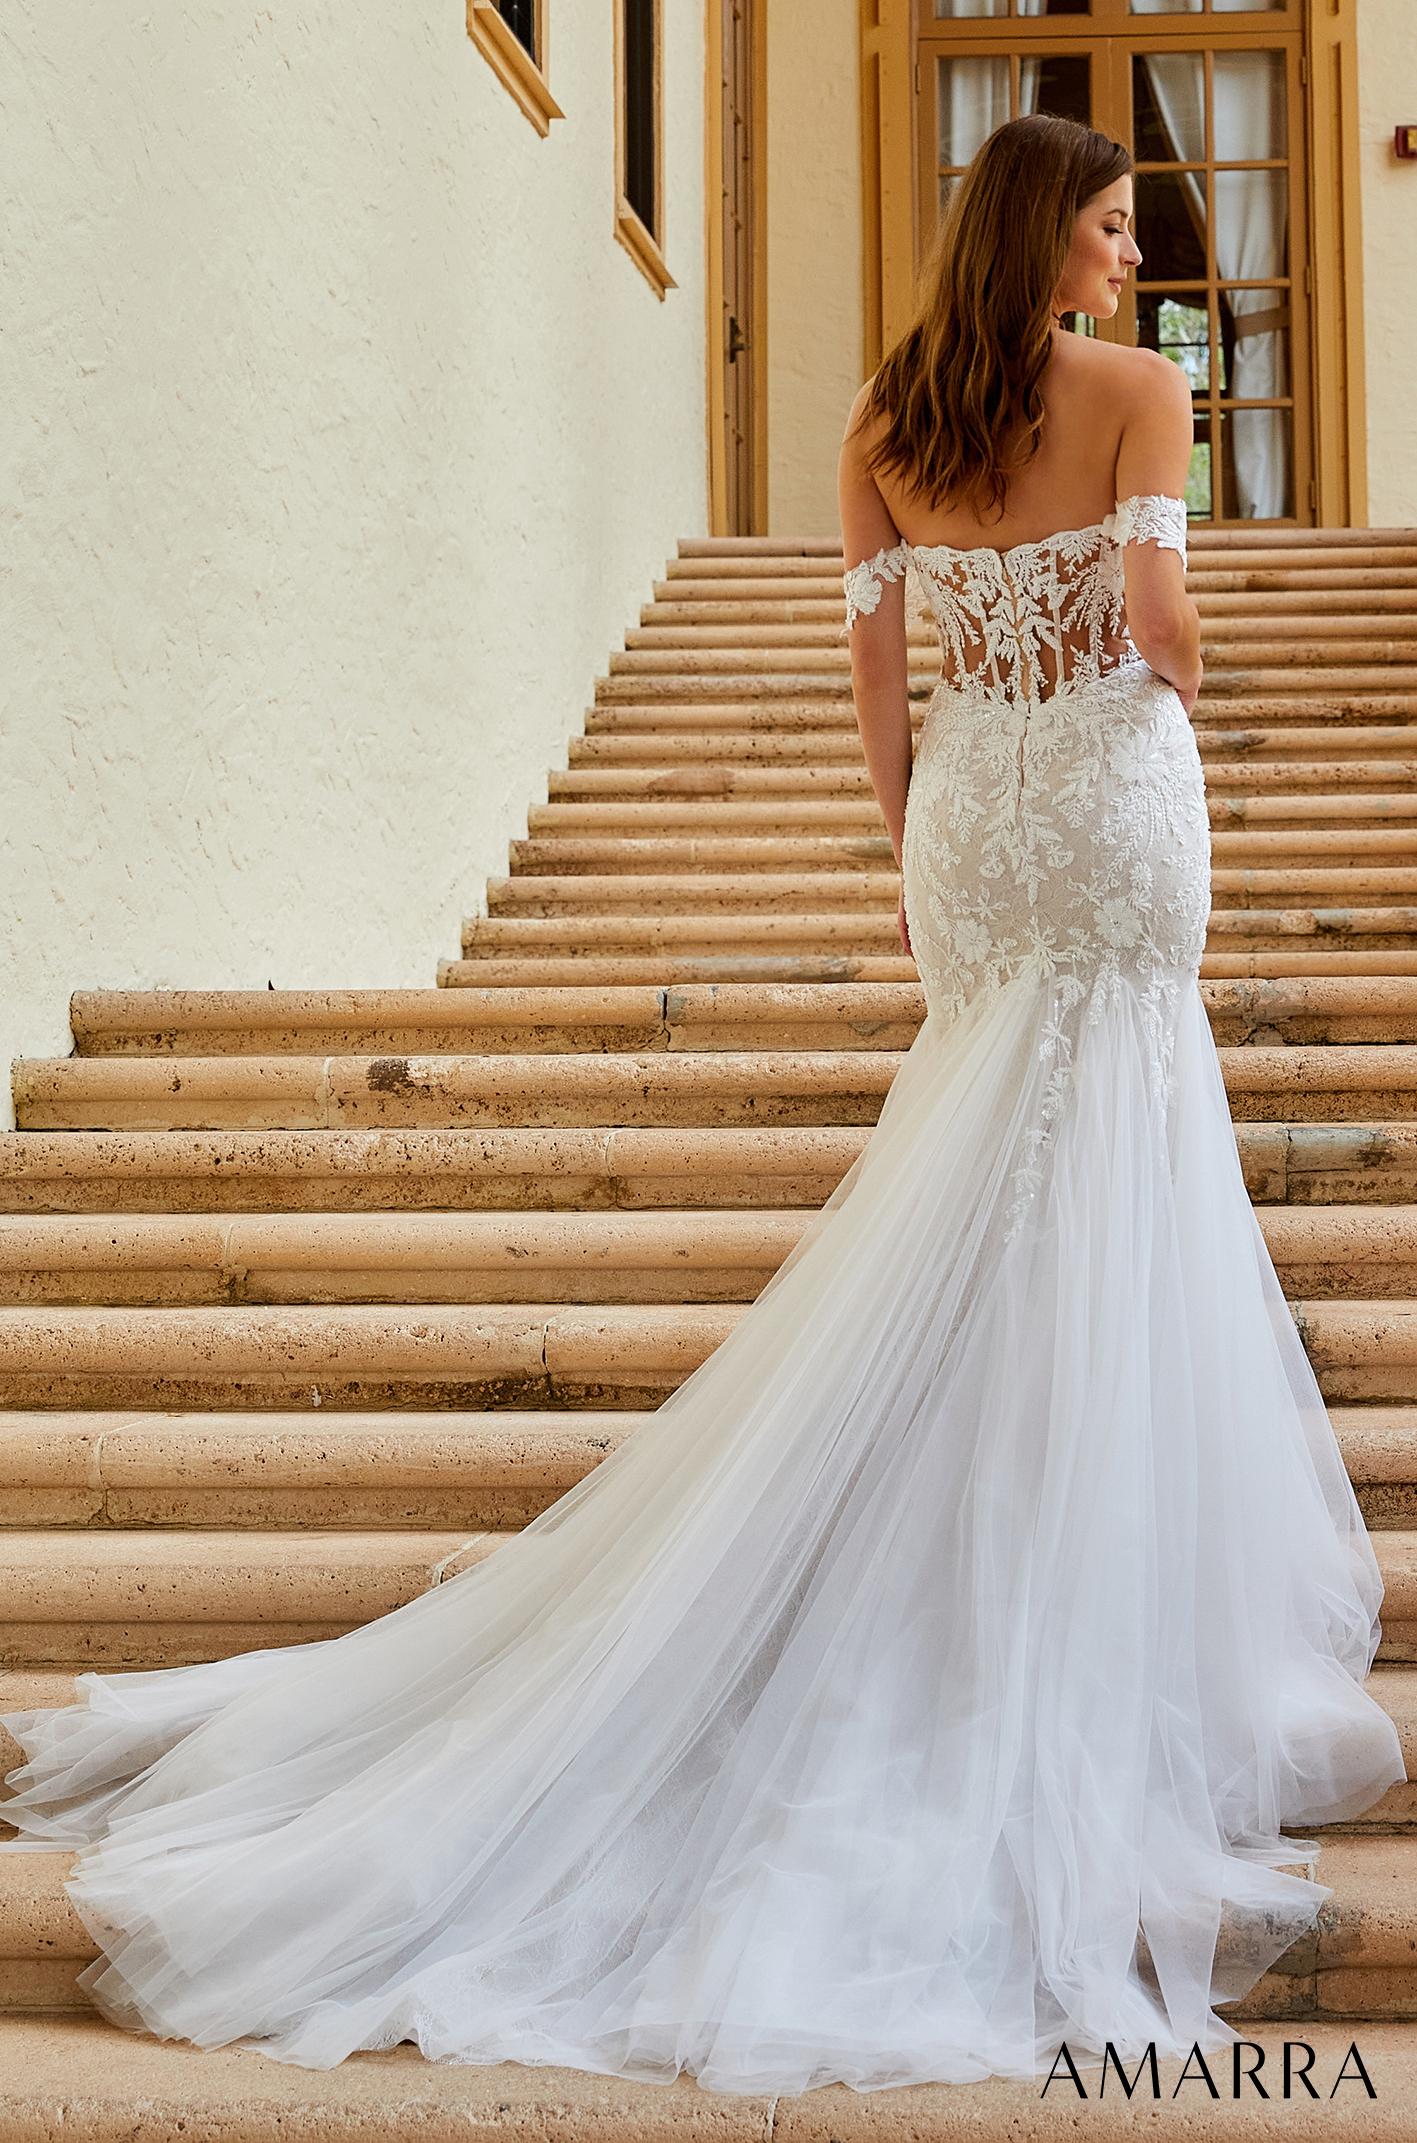 Amarra BELLA 84375 Size 8 Sheer Beaded Mermaid Wedding Dress Off